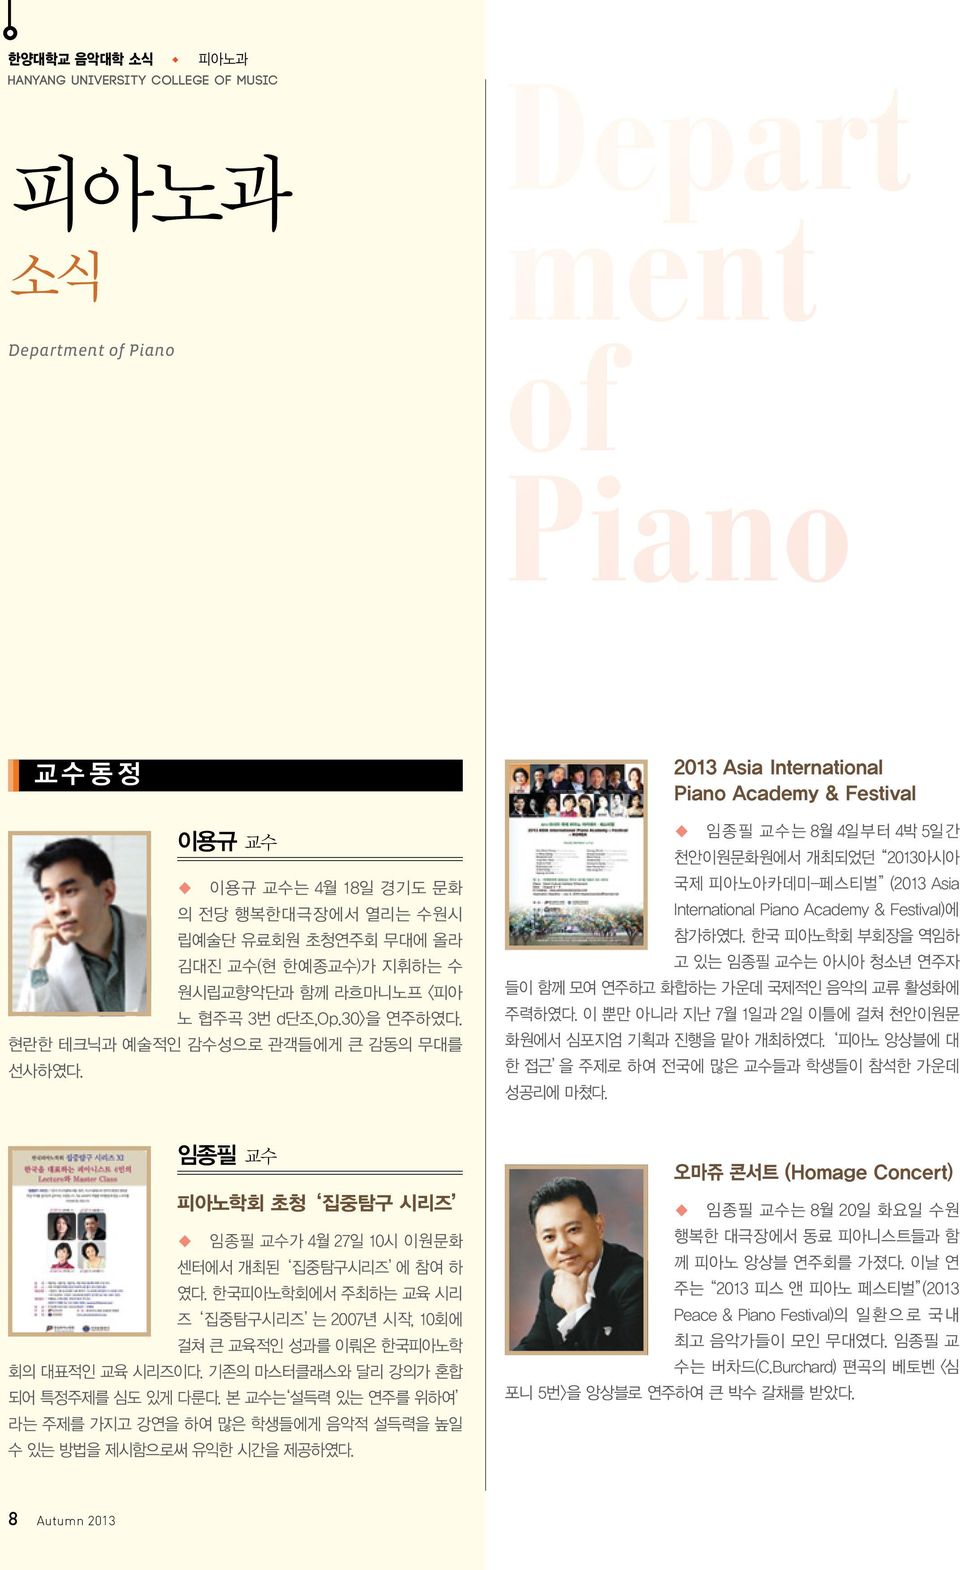 2013 Asia International Piano Academy & Festival 임종 필 교수 는 8월 4일부터 4박 5일간 천안이원문화원에서 개최되었던 2013아시아 국제 피아노아카데미-페스티벌 (2013 Asia International Piano Academy & Festival)에 참가하였다.